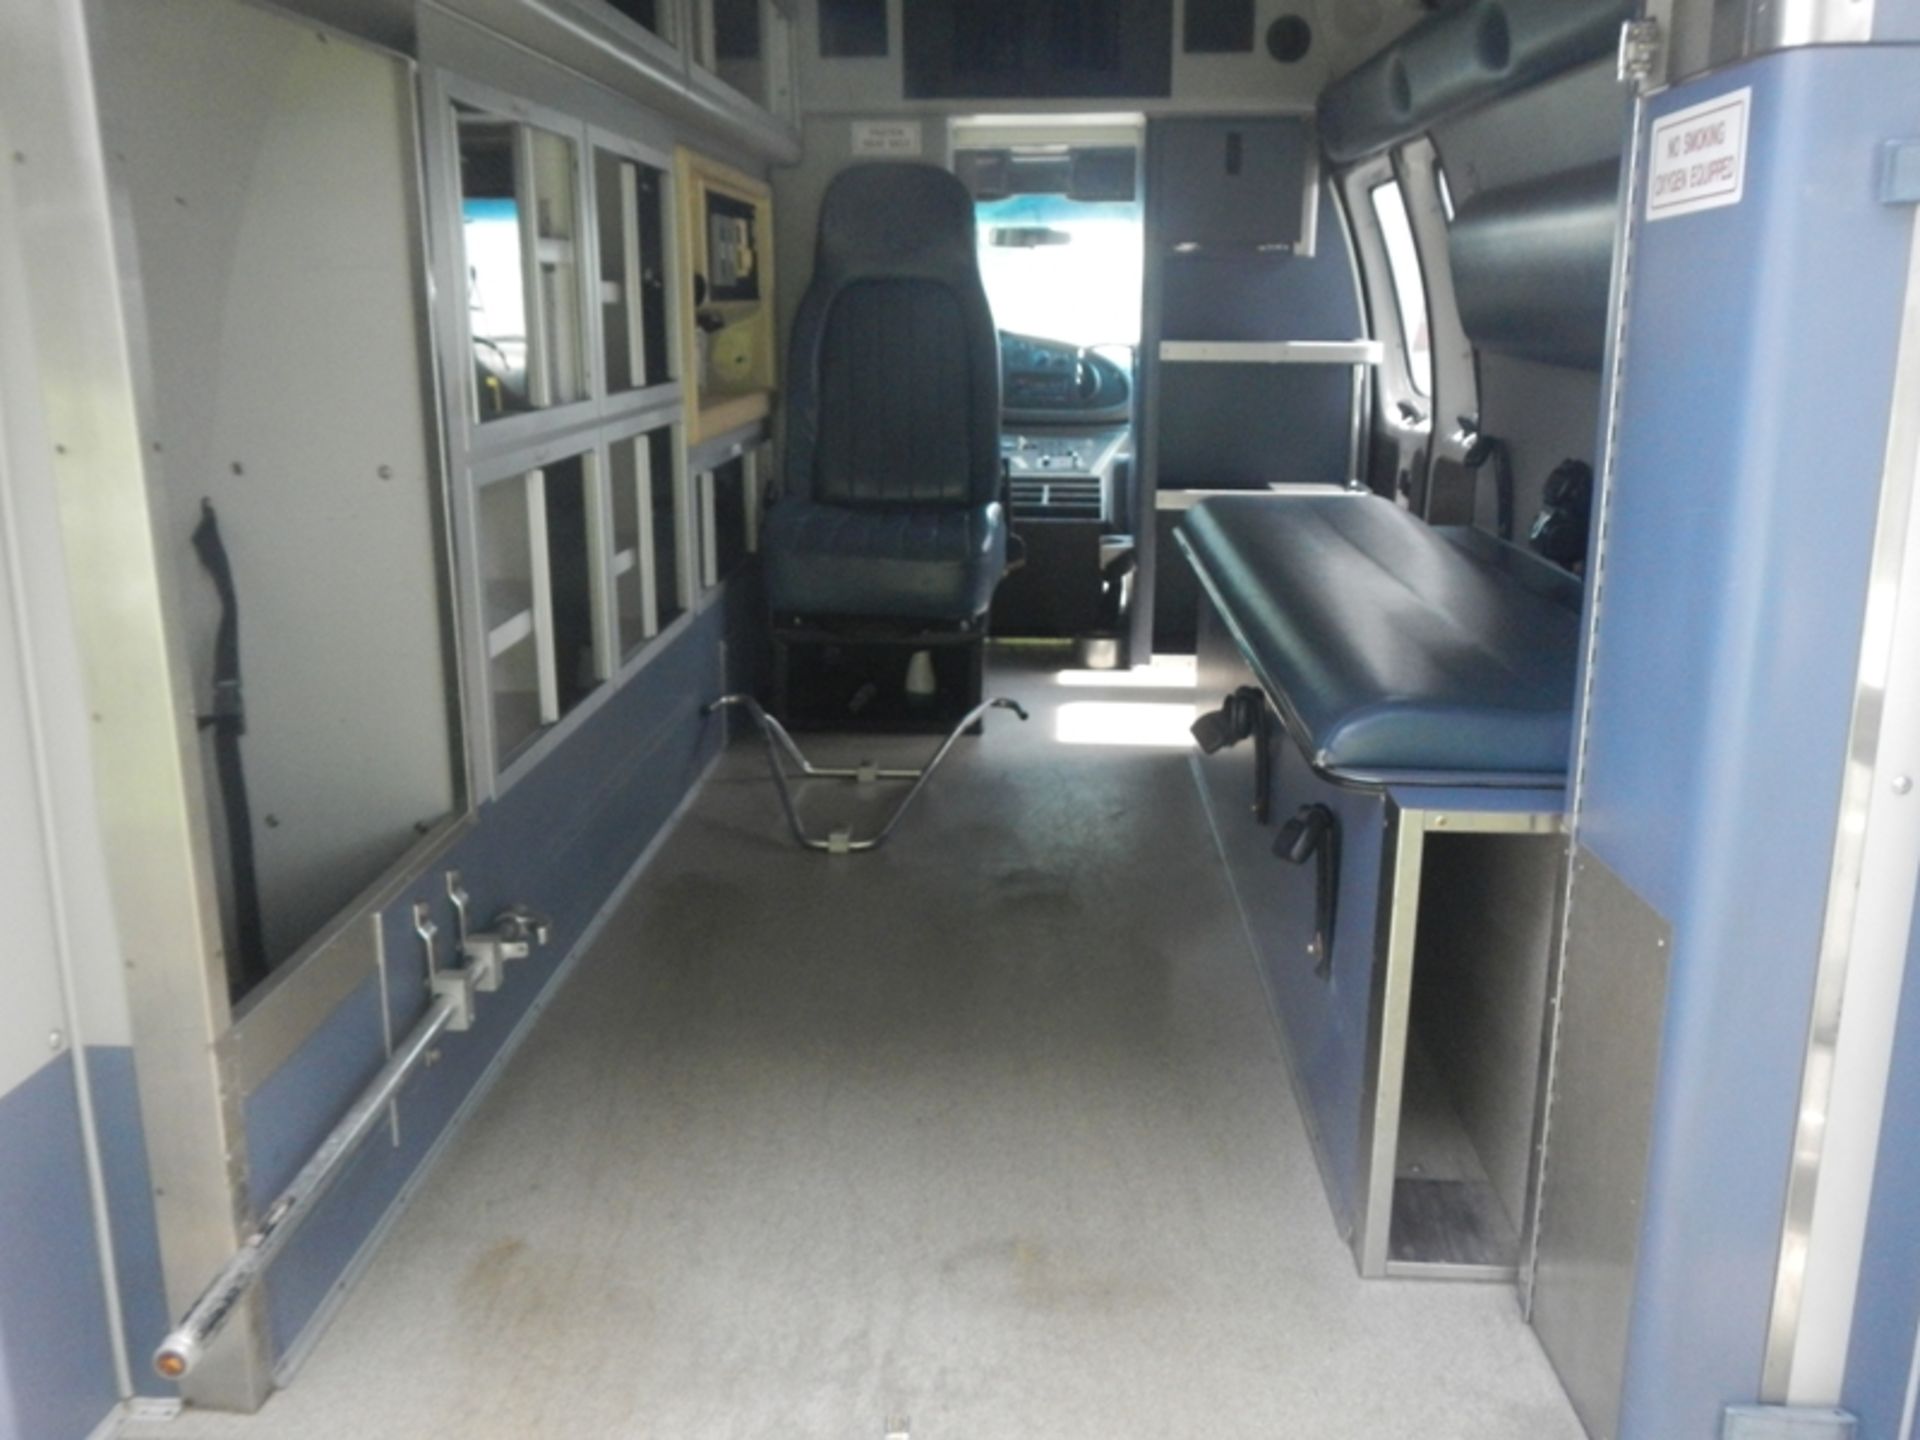 2001 FORD E-350 Super Duty Type II Ambulance, 7.3 diesel - 248,021 miles - 1FDSS34F51HA84186 - Image 2 of 6